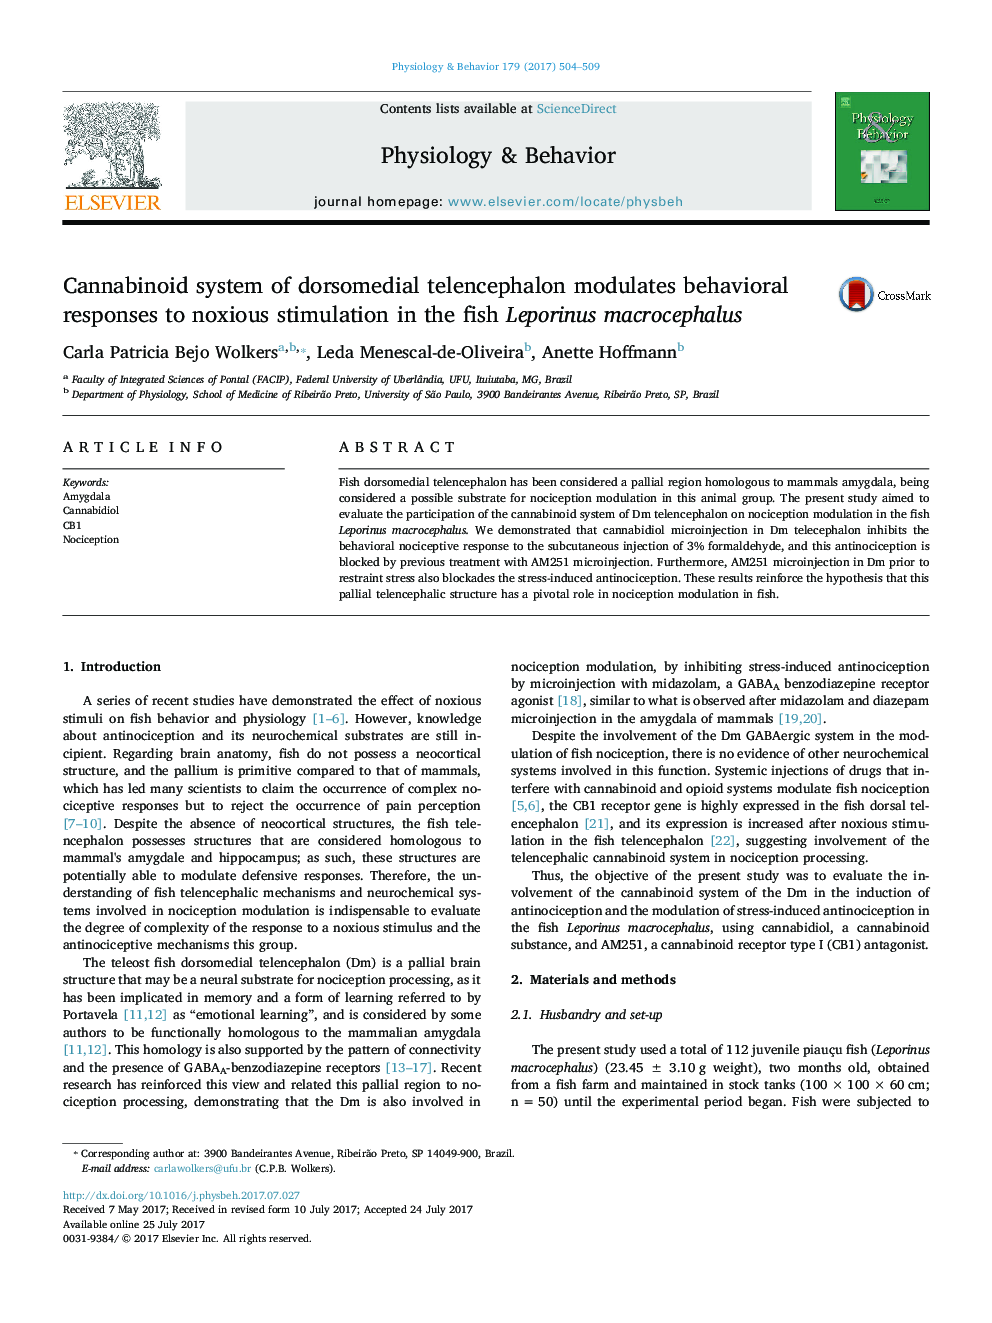 Cannabinoid system of dorsomedial telencephalon modulates behavioral responses to noxious stimulation in the fish Leporinus macrocephalus